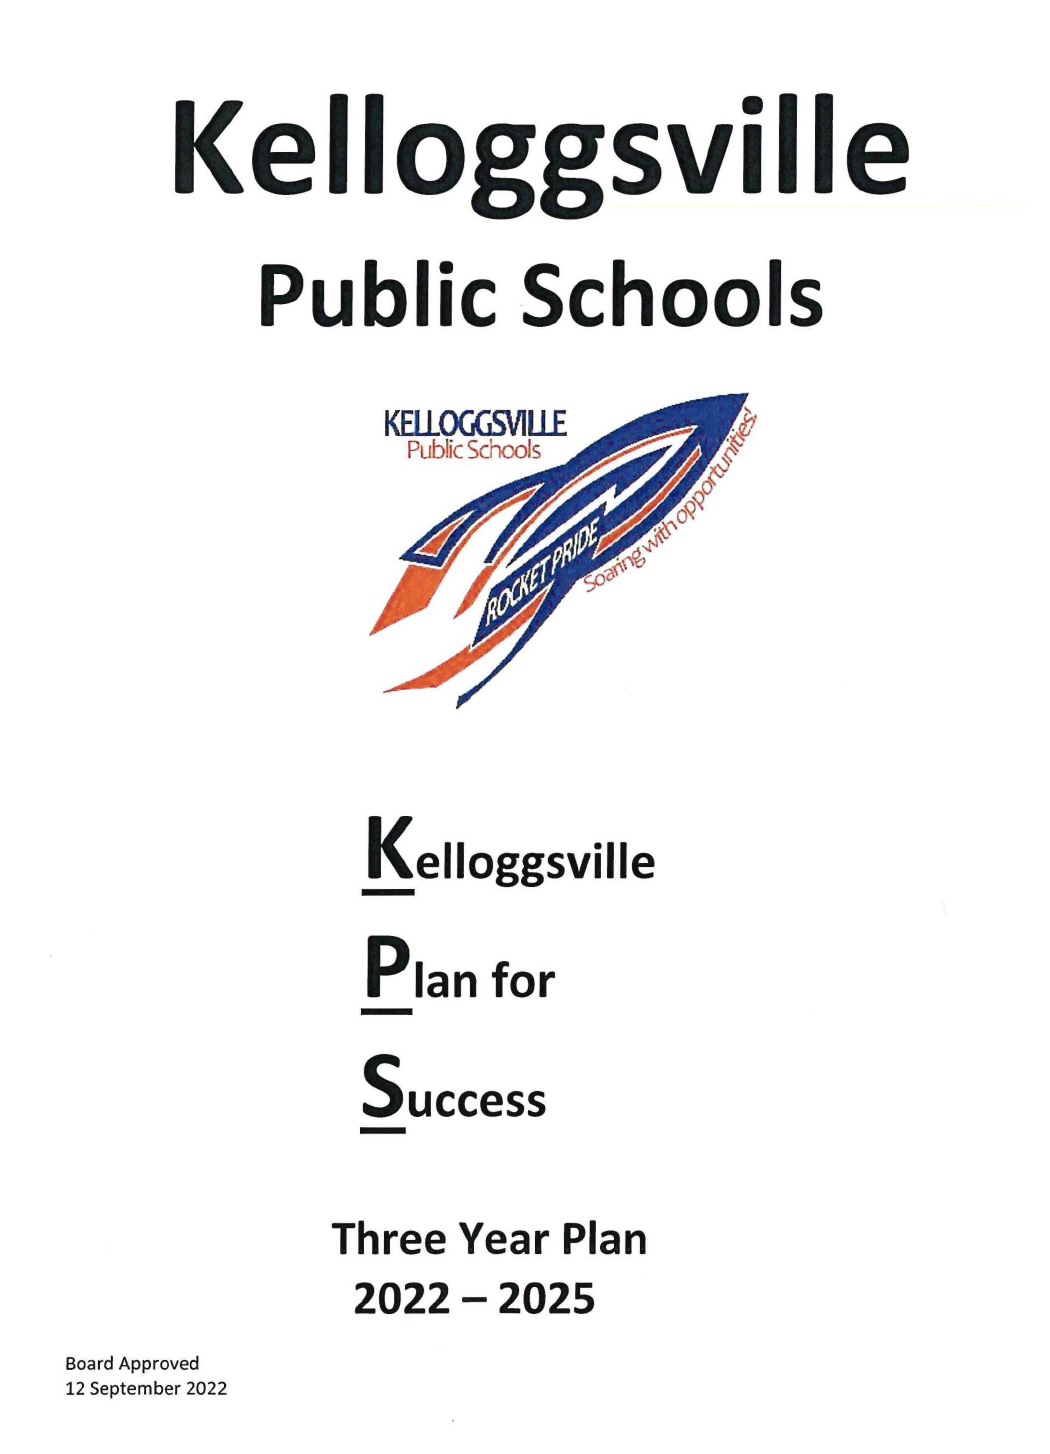 KPS Three Year Plan 2022-25